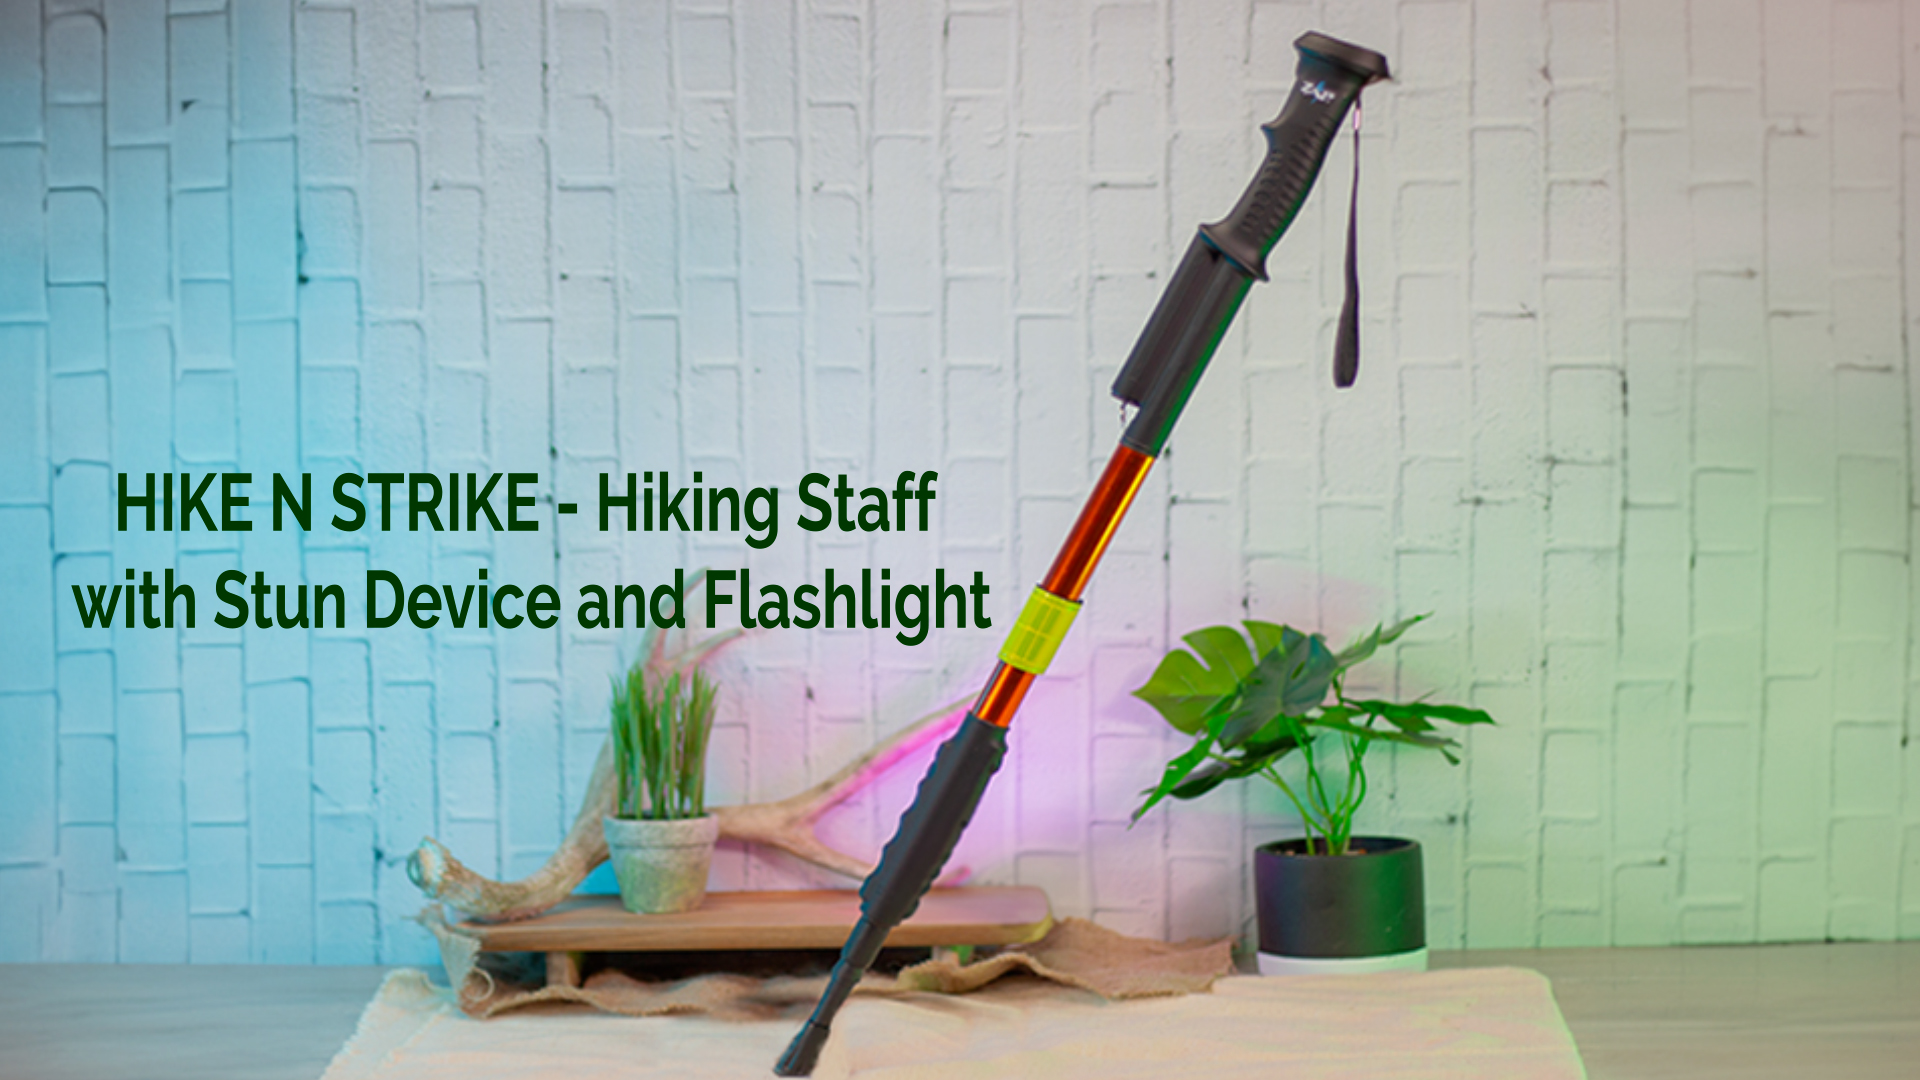 HIKE N STRIKE - Hiking Staff with Stun Device and Flashlight